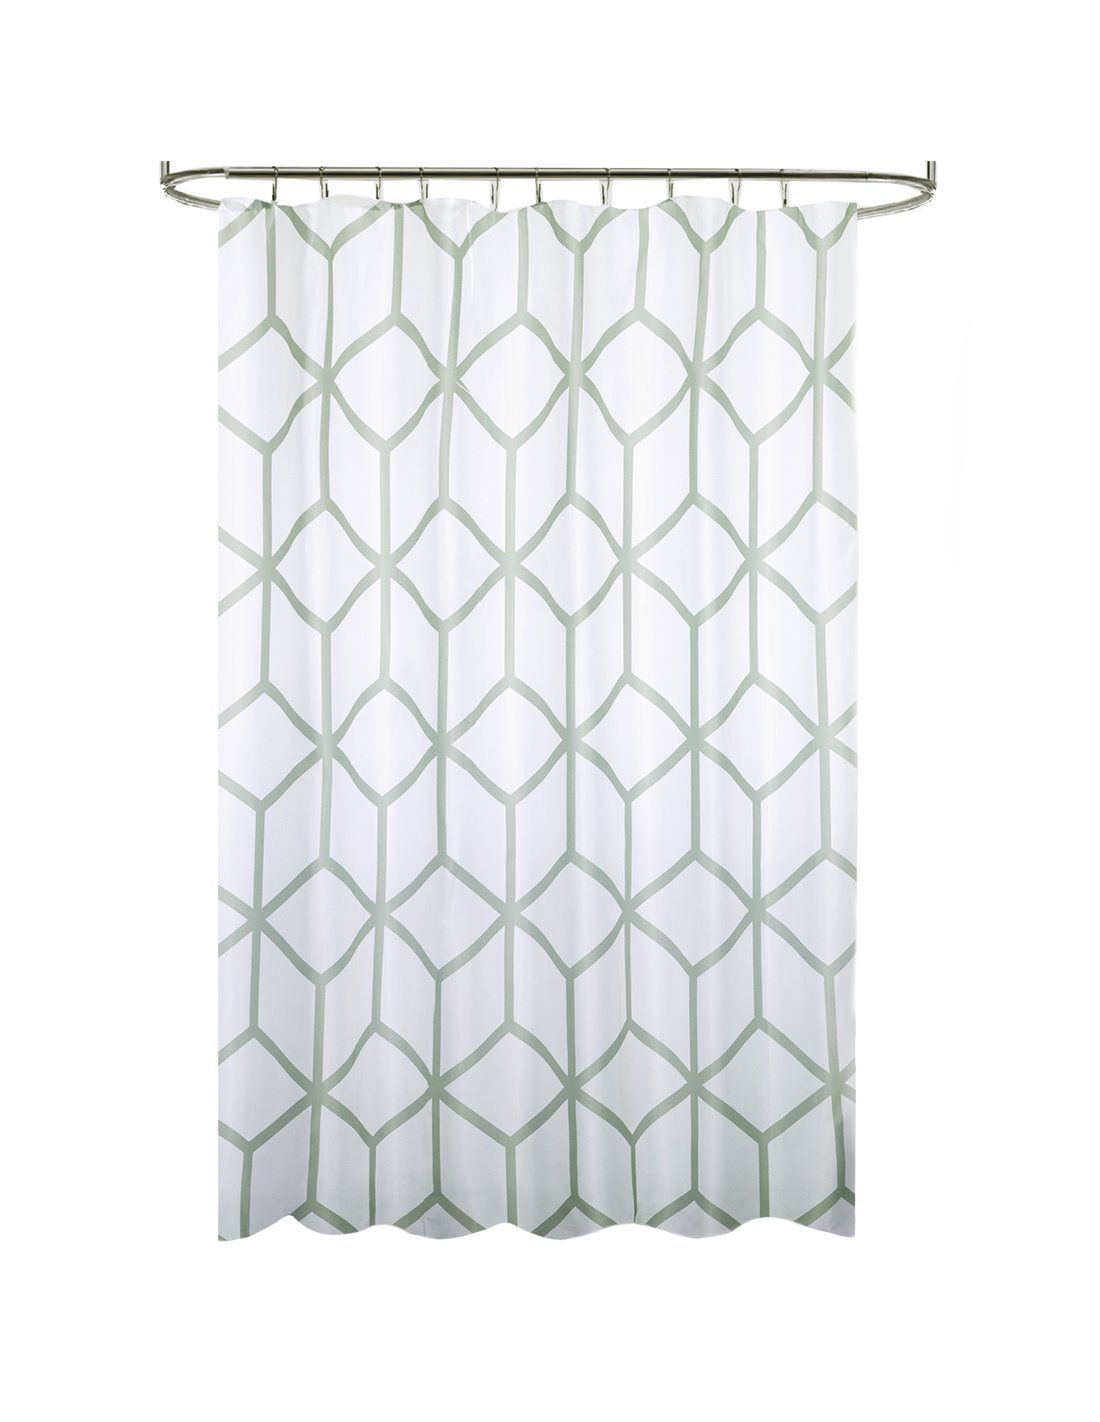 Tenda doccia in tessuto geometrico 180 x 200 cm. Impermeabile